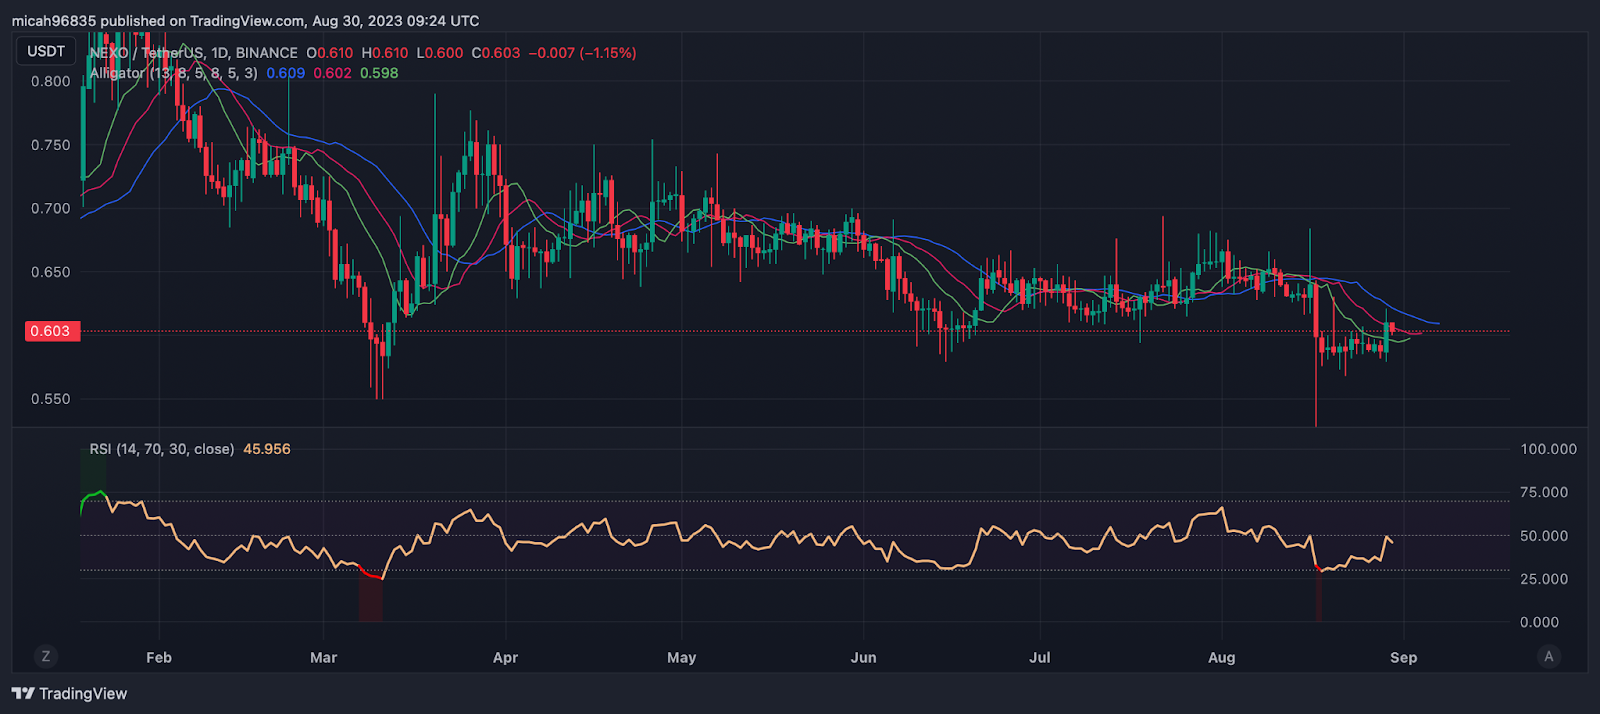 Nexo (NEXO) live coin price, charts, markets & liquidity